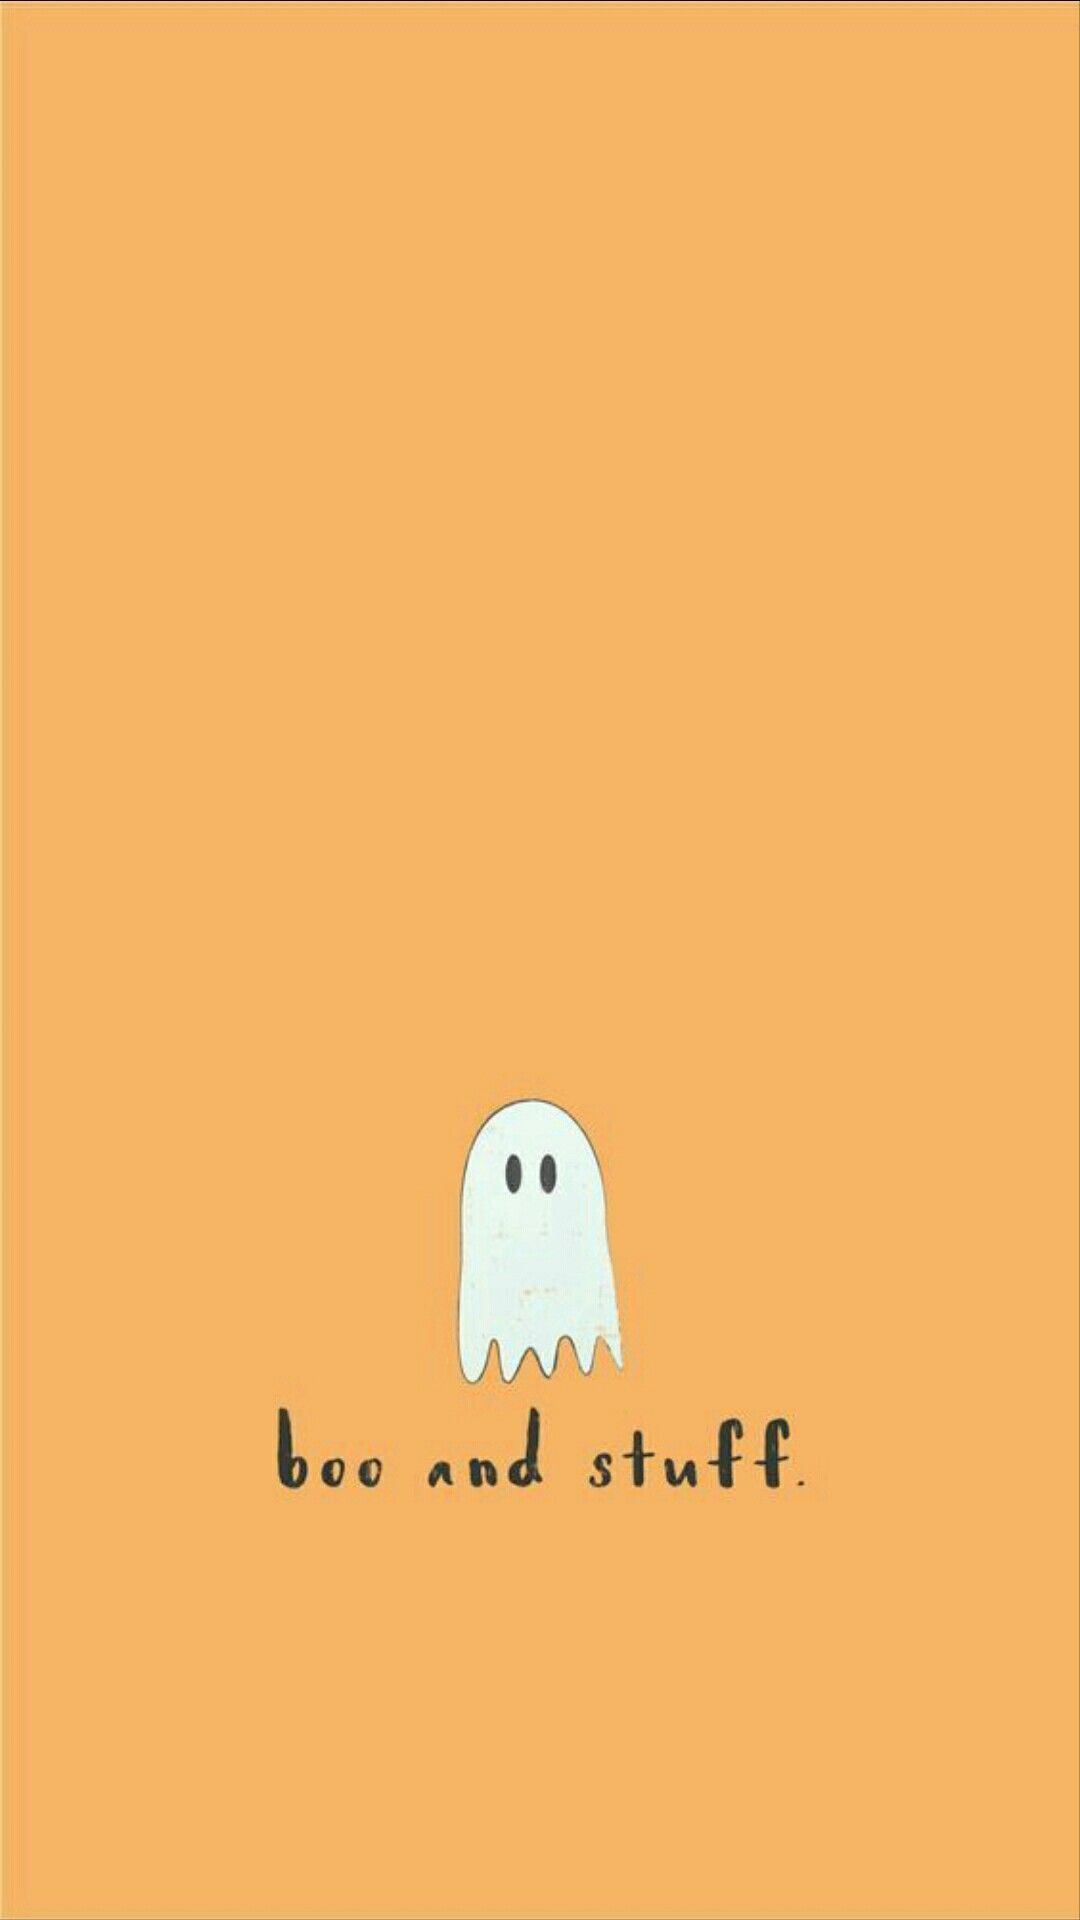 Boo and stuff. Halloween wallpaper iphone, Halloween wallpaper background, Cute fall wallpaper